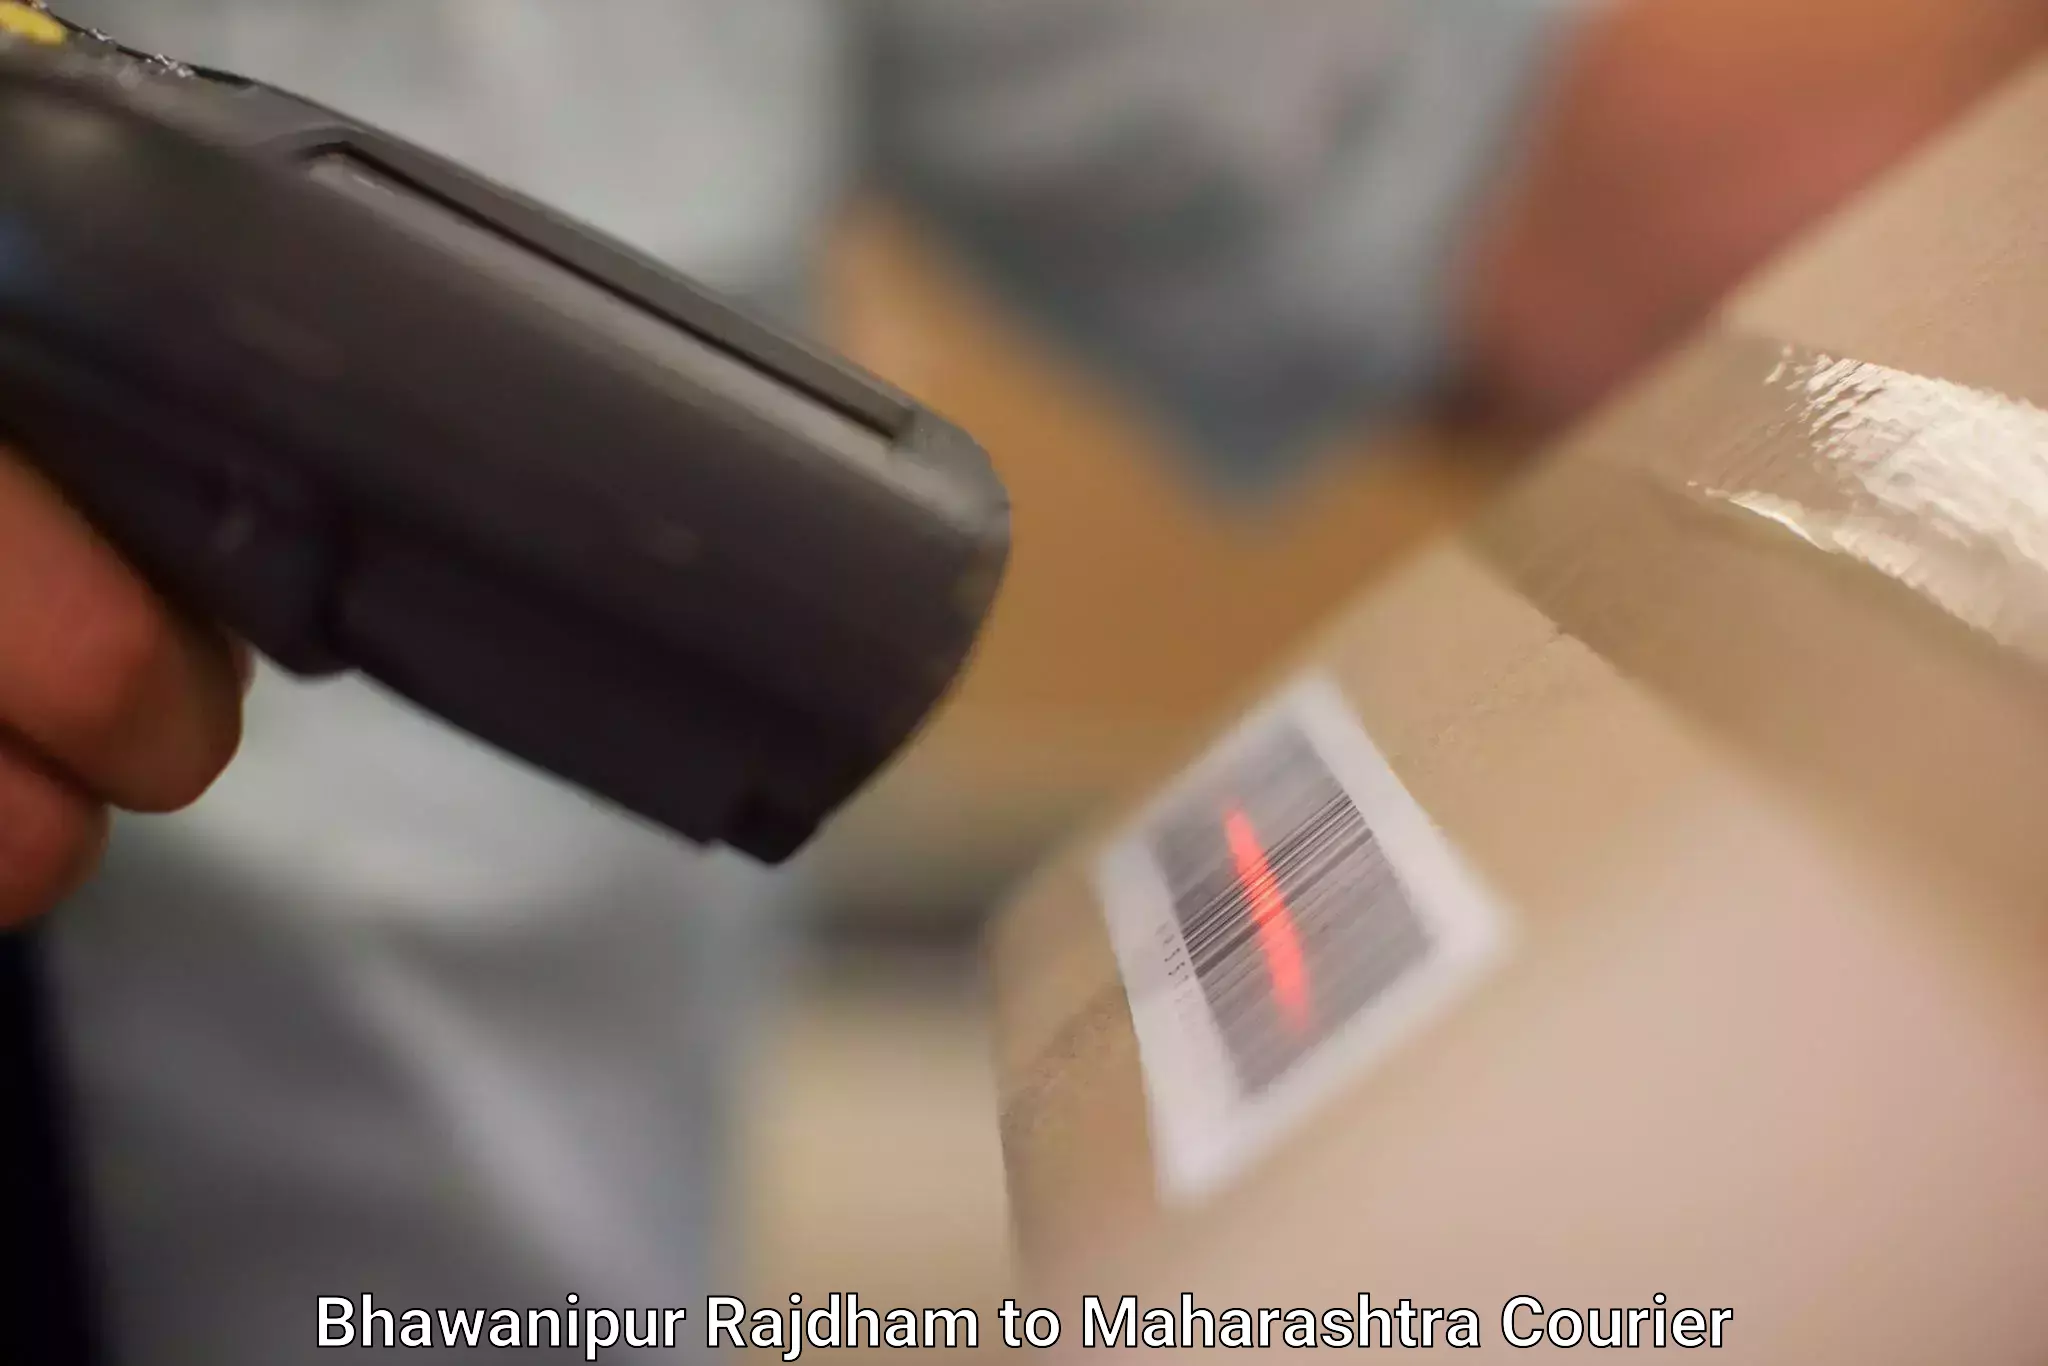 State-of-the-art courier technology Bhawanipur Rajdham to Nashik